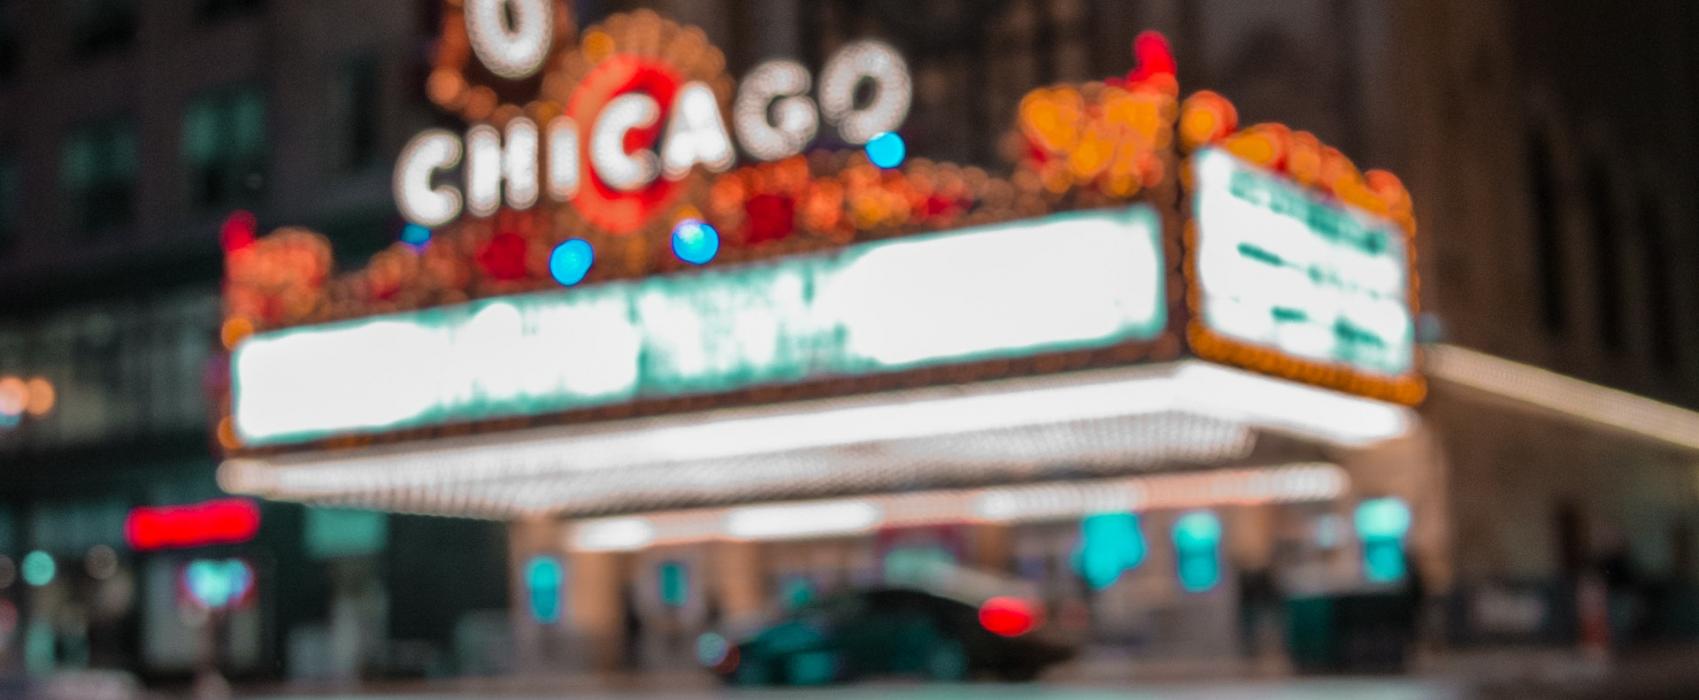 chicago theatre lights